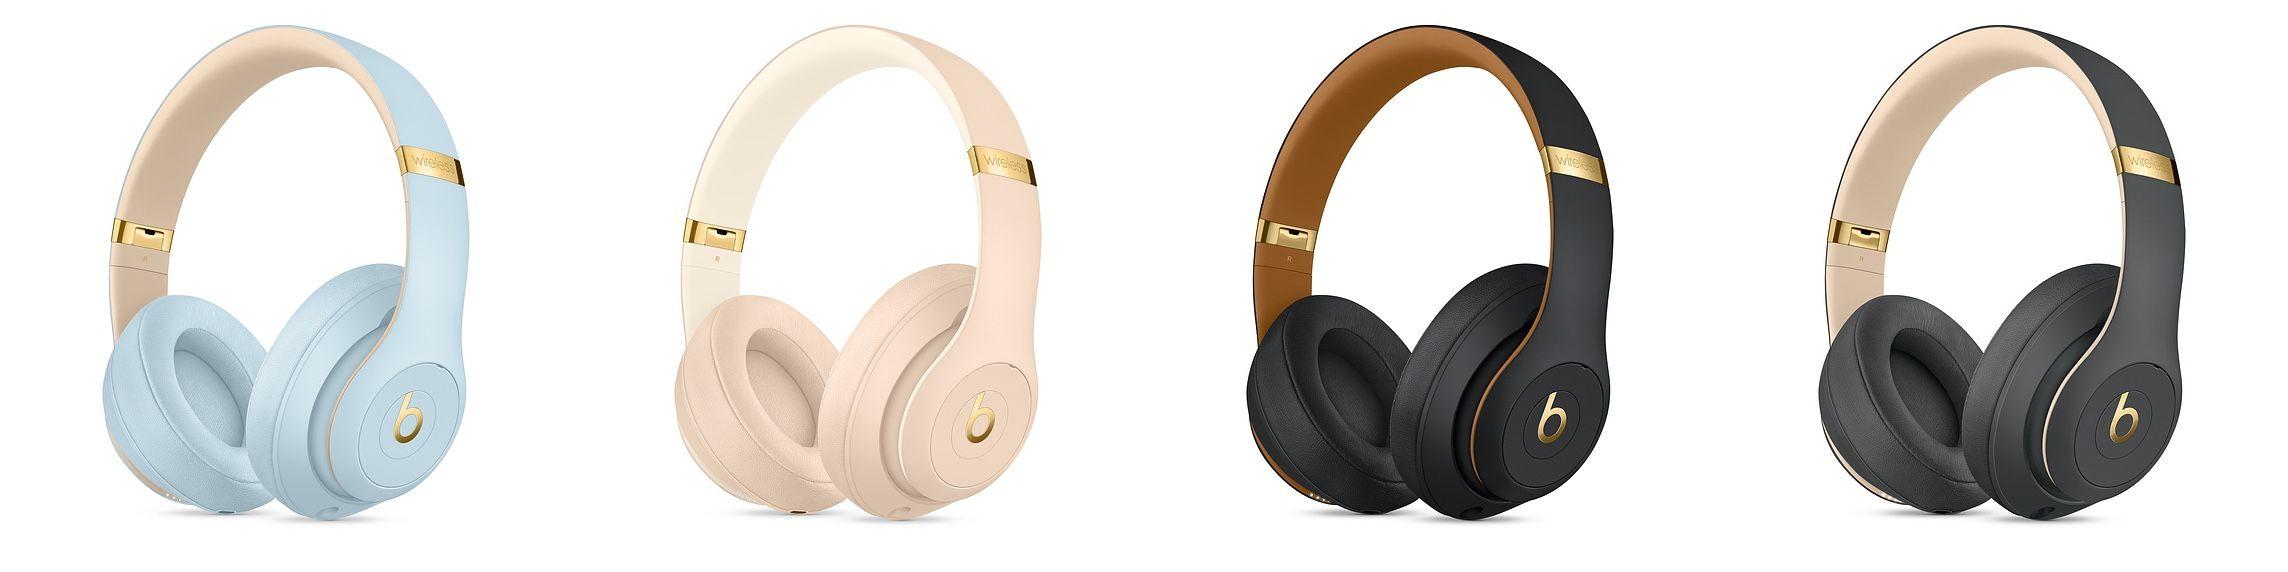 Gold Beats Logo - Apple Debuts New 'Skyline' Beats Studio 3 Wireless Headphones Collection